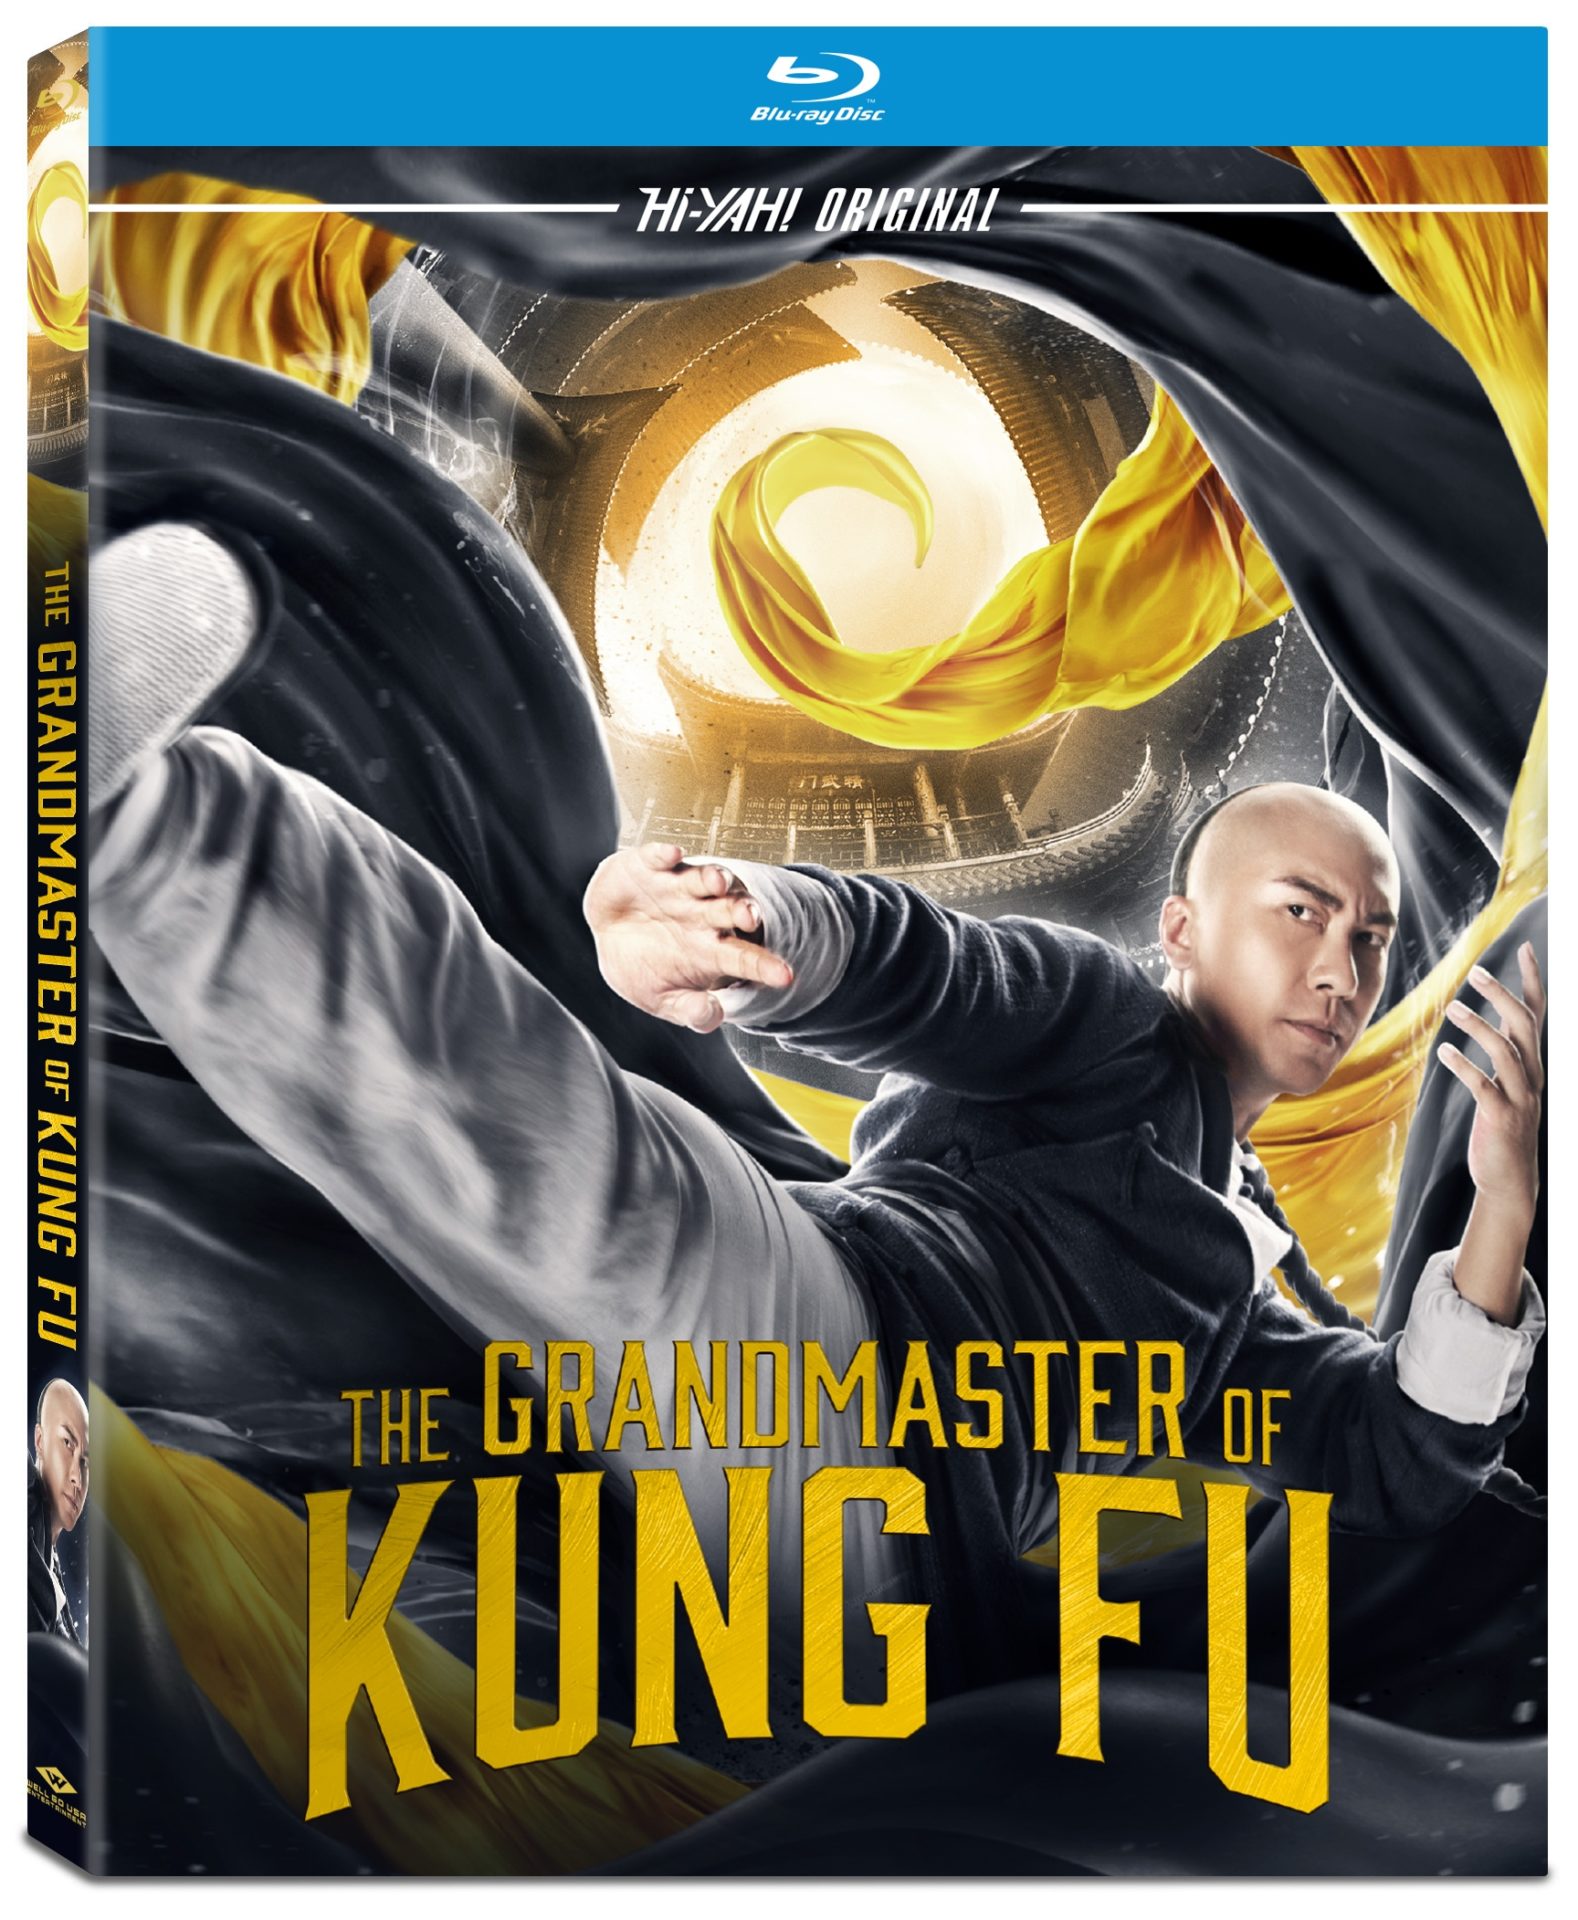 The Grandmaster: A moody, dreamy martial-arts epic